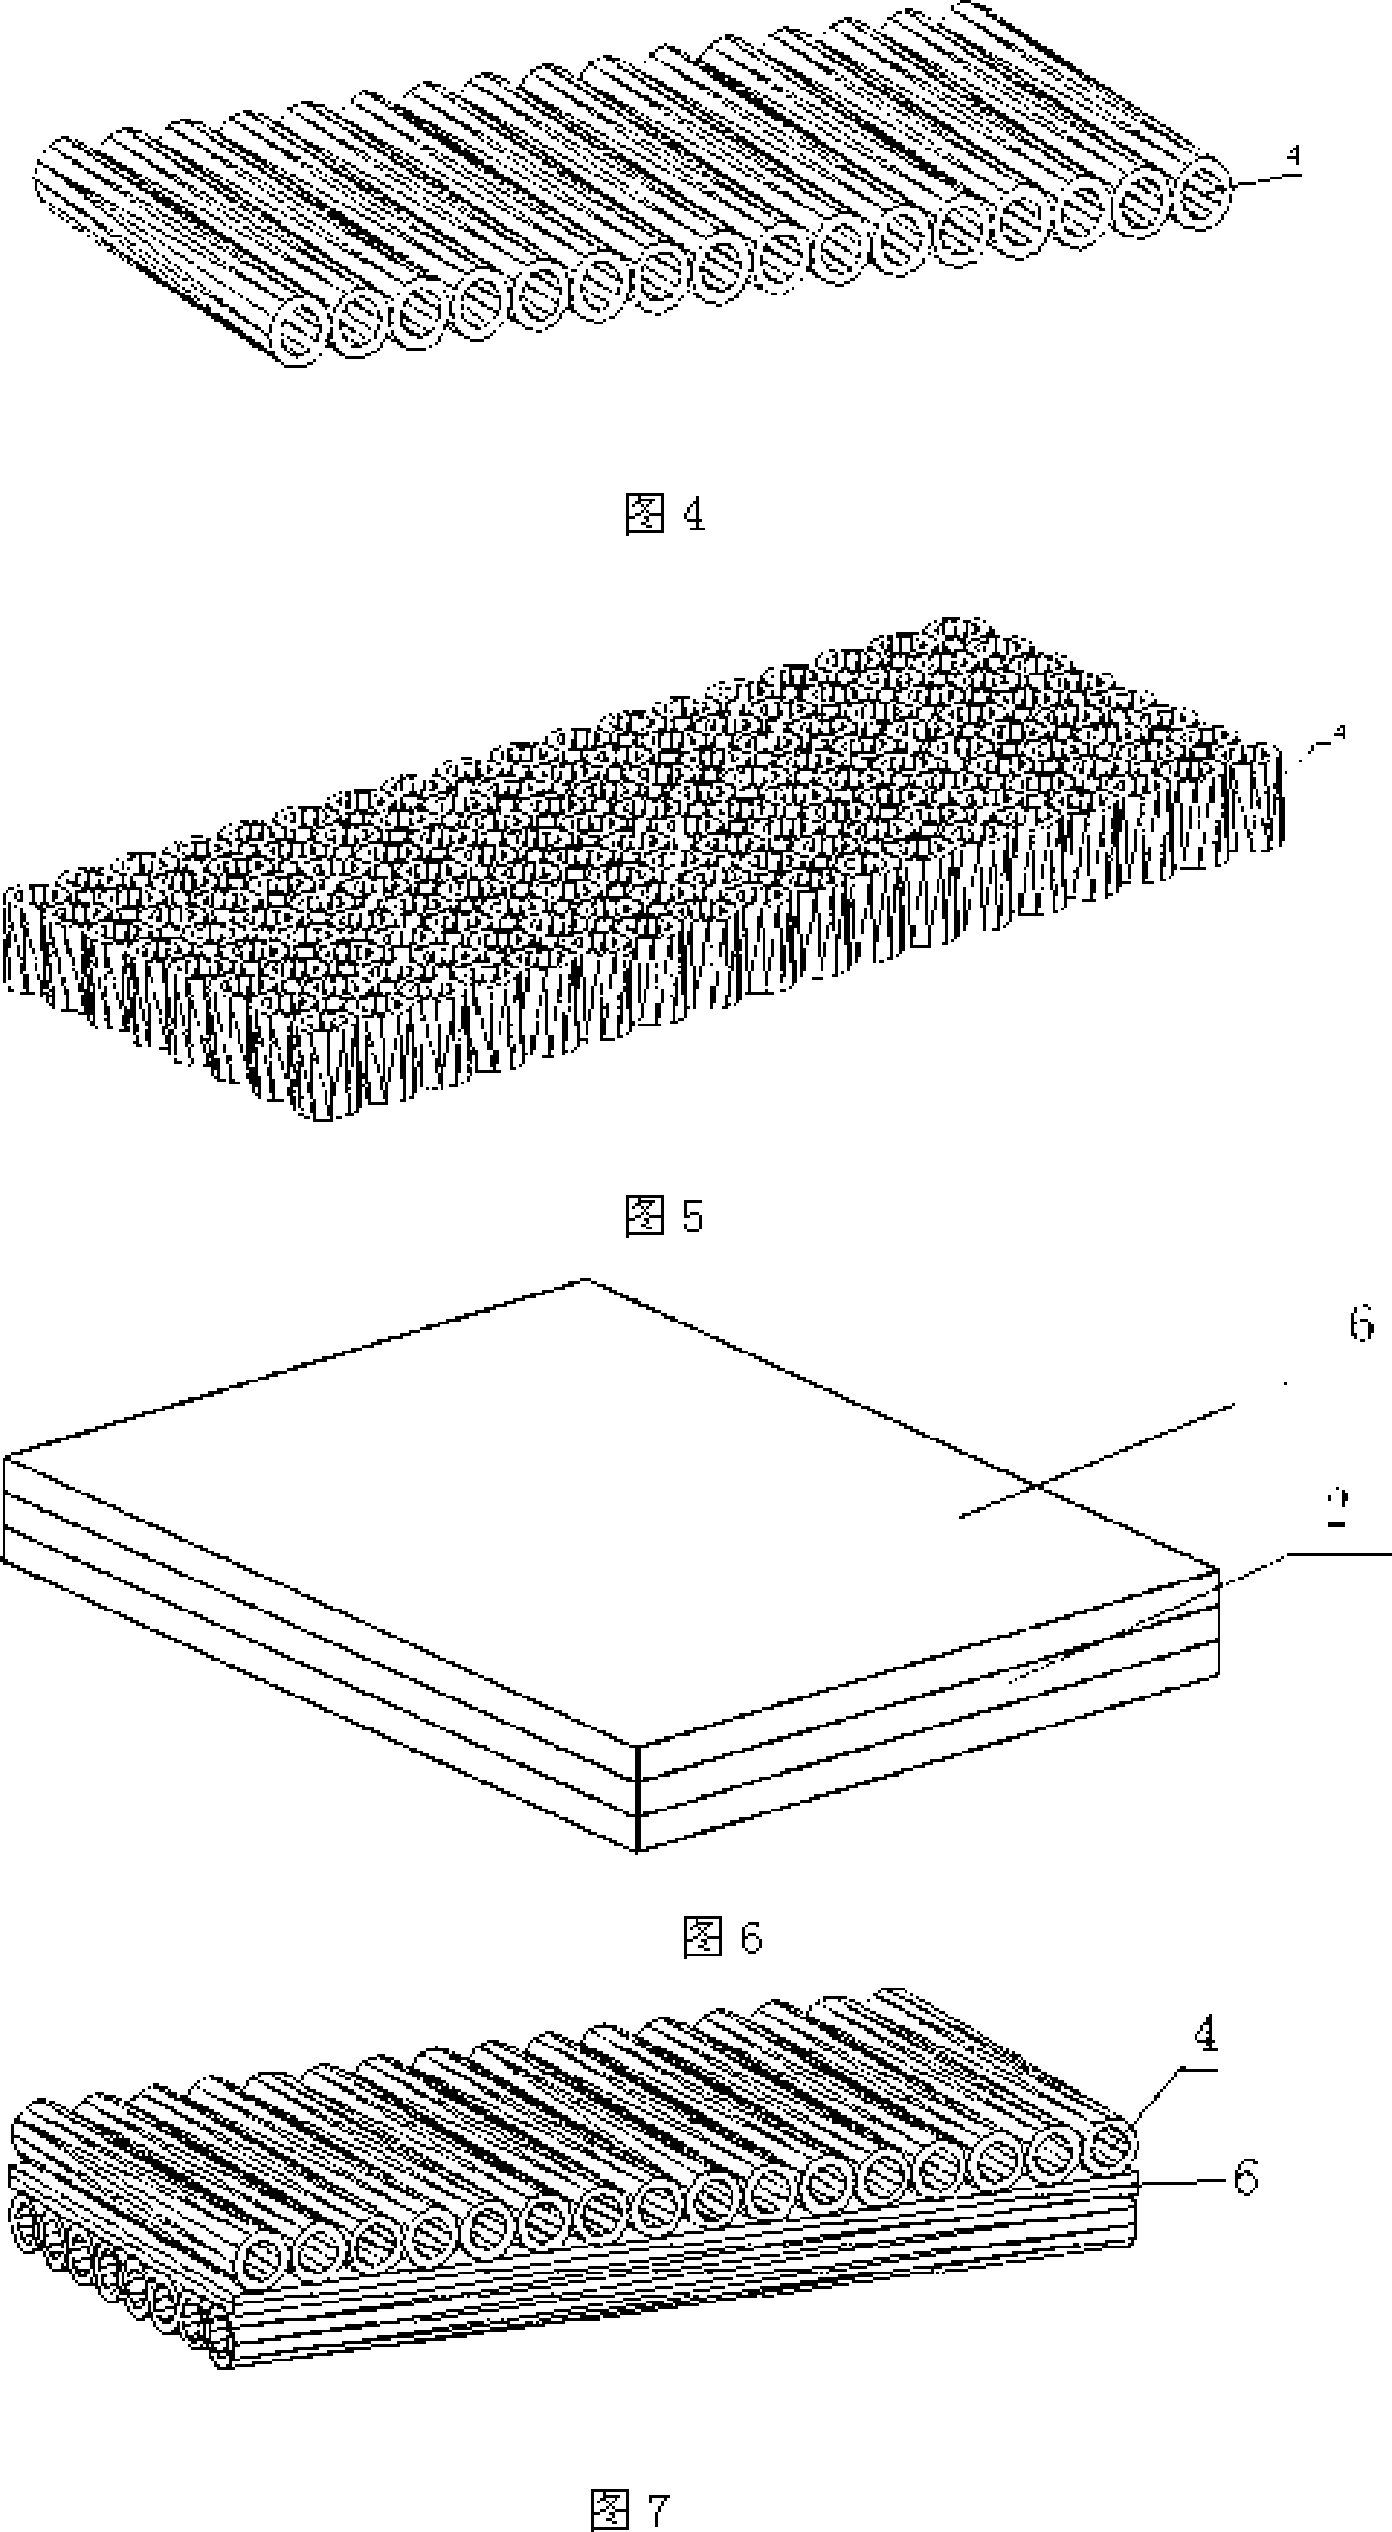 Plant-fiber elastic cushion and mfg. method